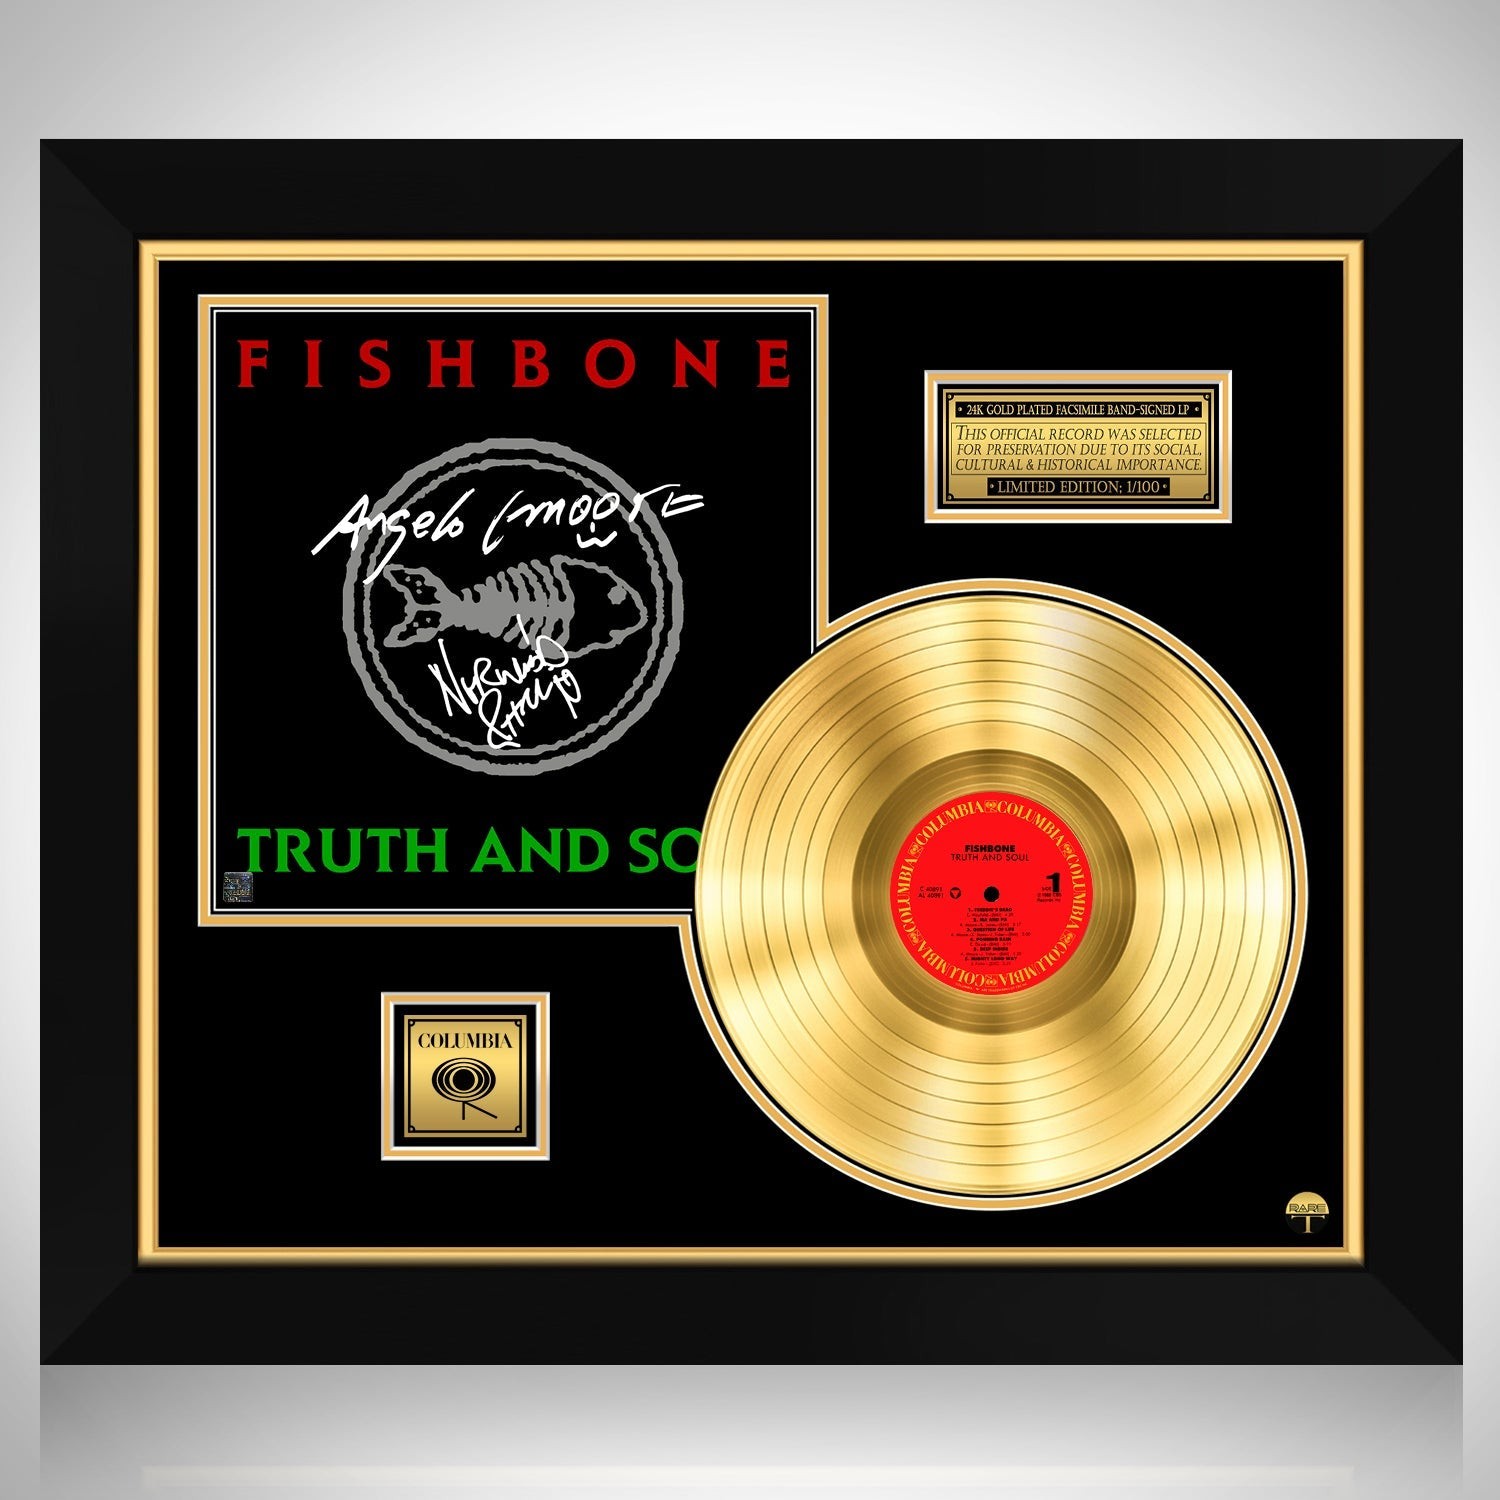 Fishbone - Truth and Soul Platinum LP Limited Signature Edition